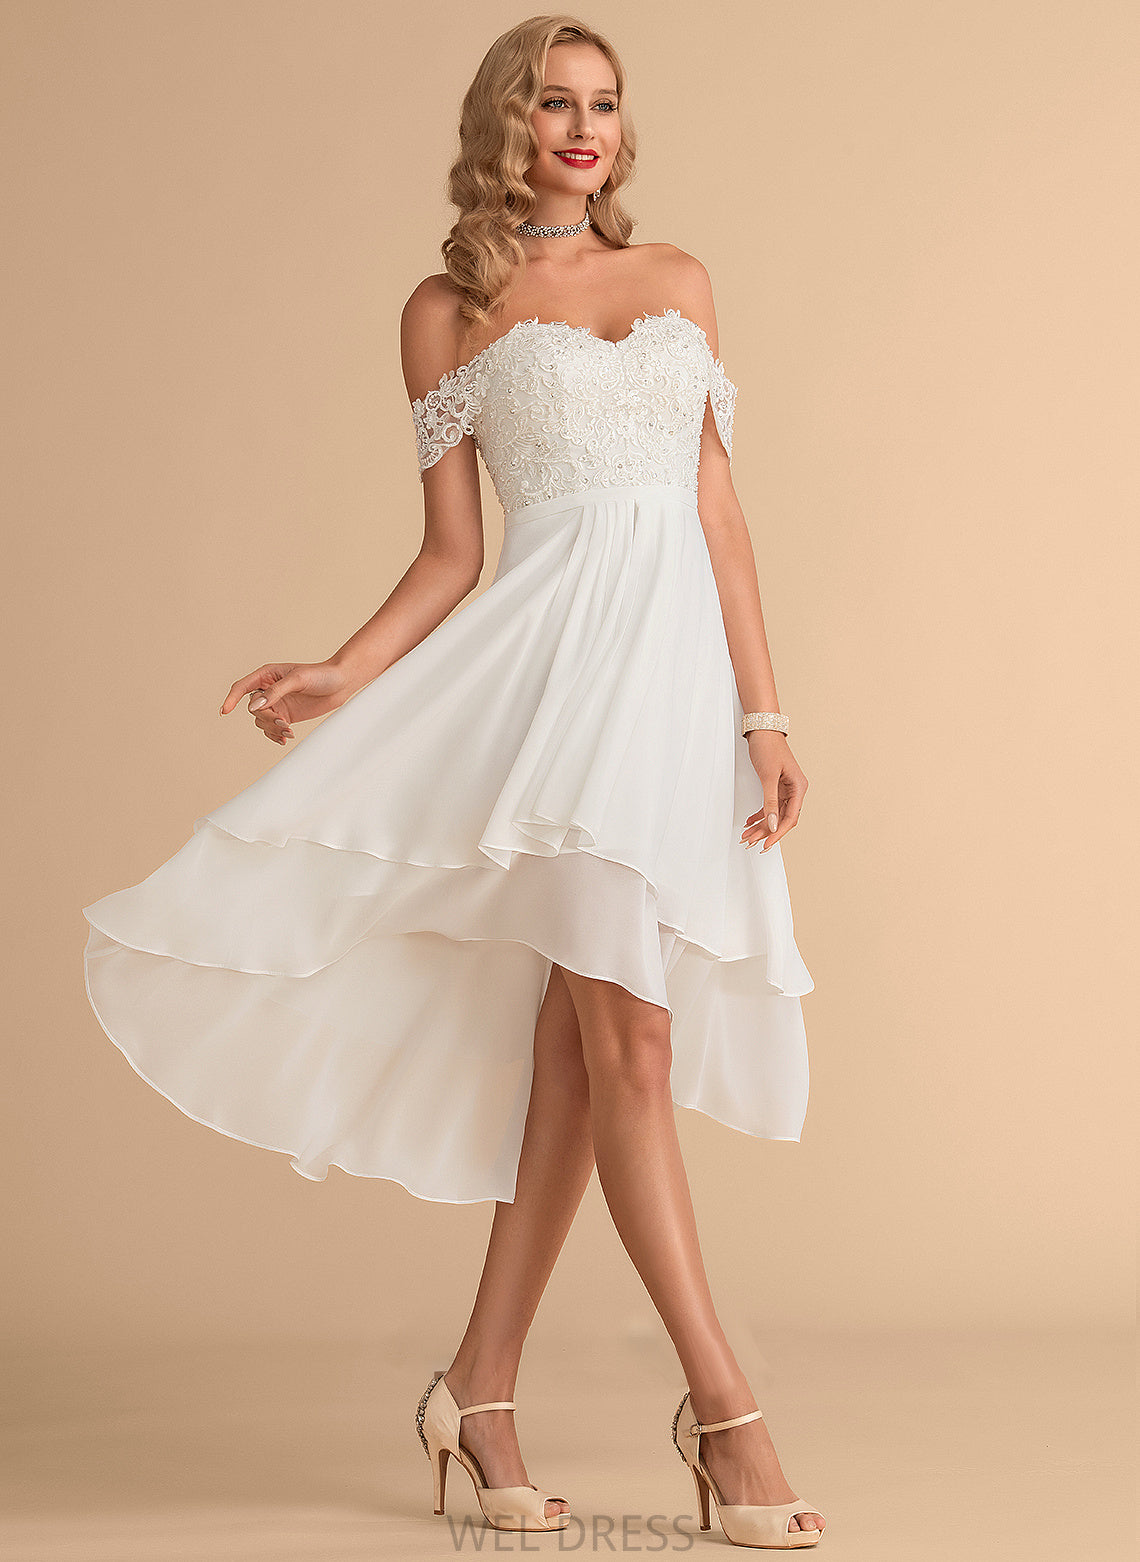 Dress Asymmetrical Wedding Dresses With Beading Sequins A-Line Lace Wedding Monserrat Chiffon